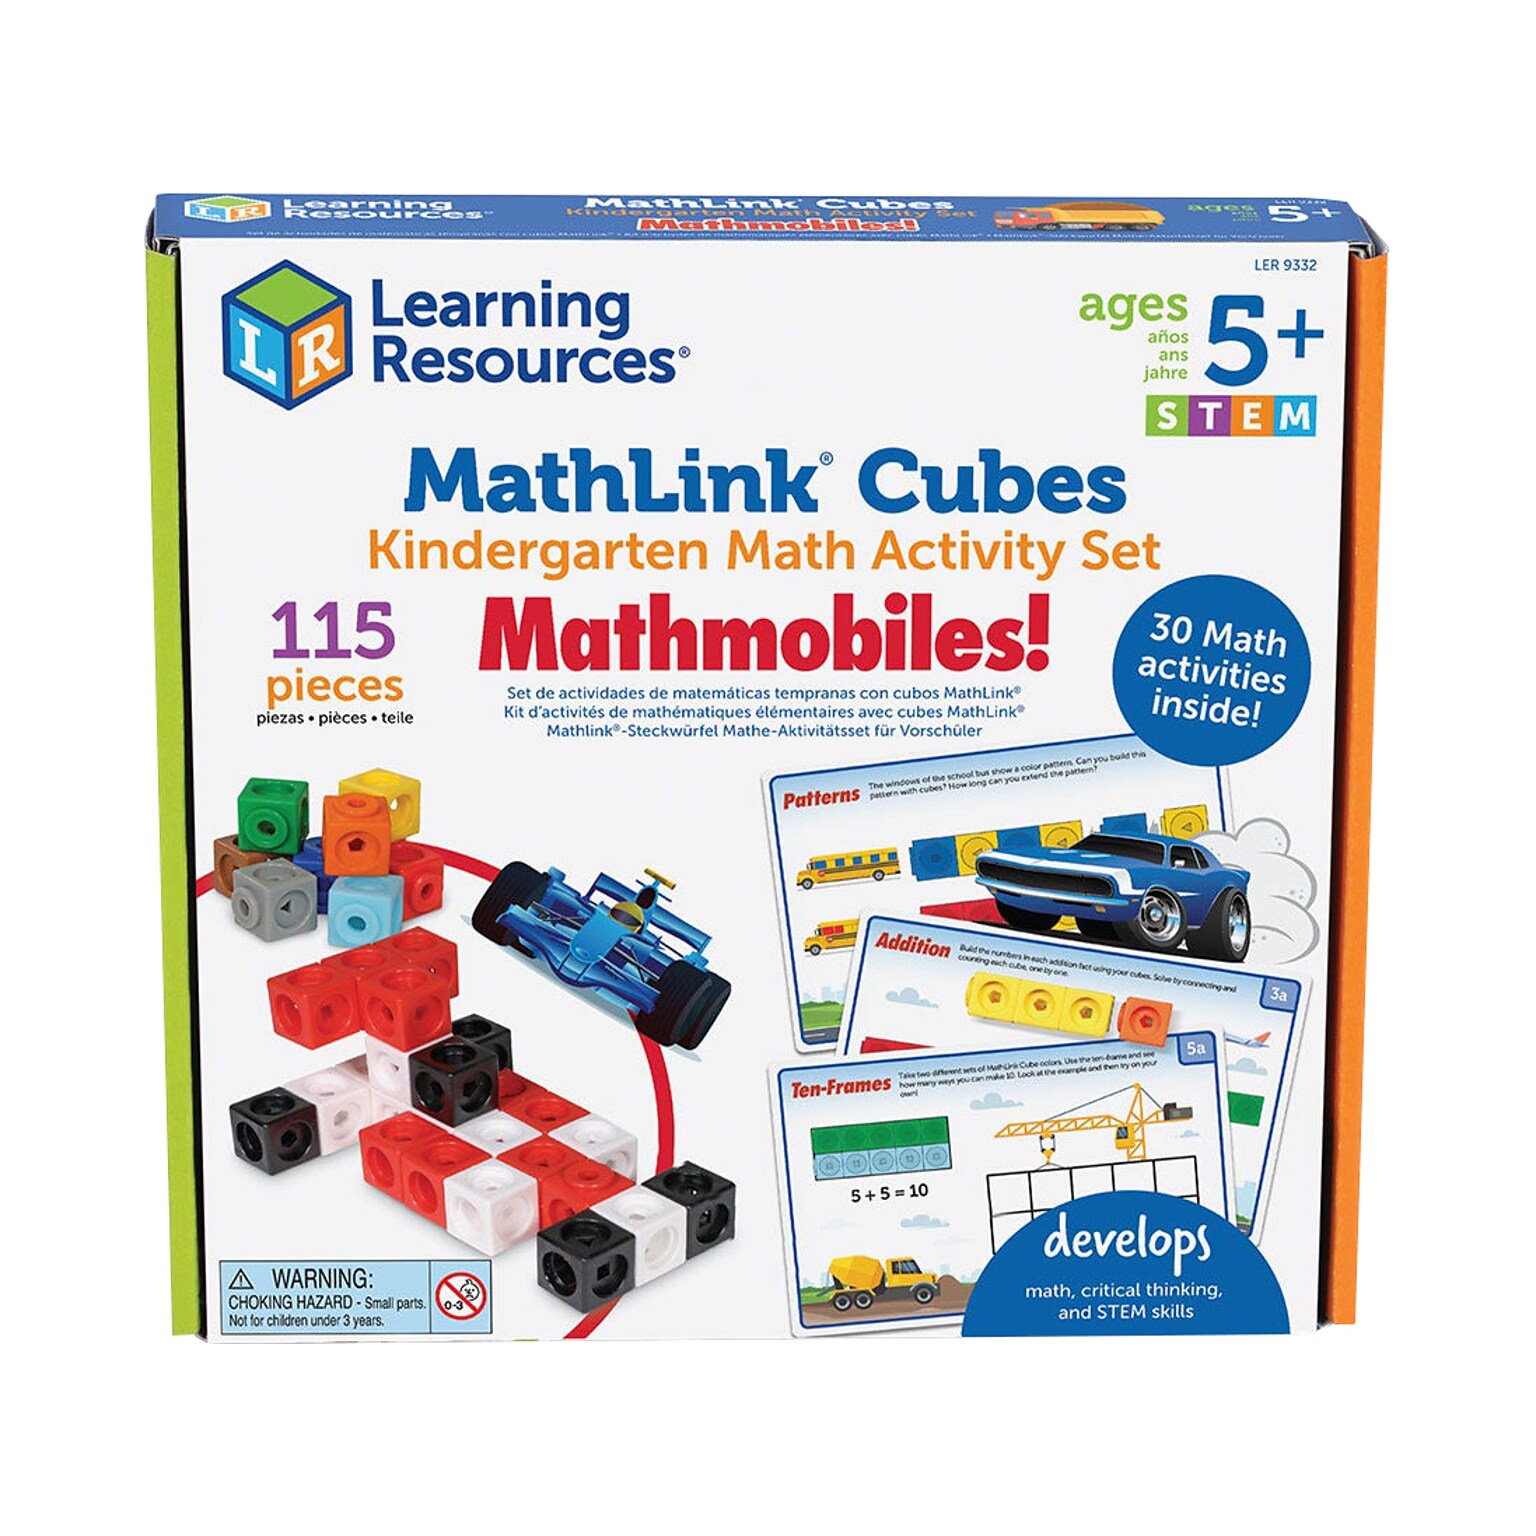 Learning Resources MathLink Cubes Kindergarten Math Activity Set: Mathmobiles!, Multicolor (LER 9332)